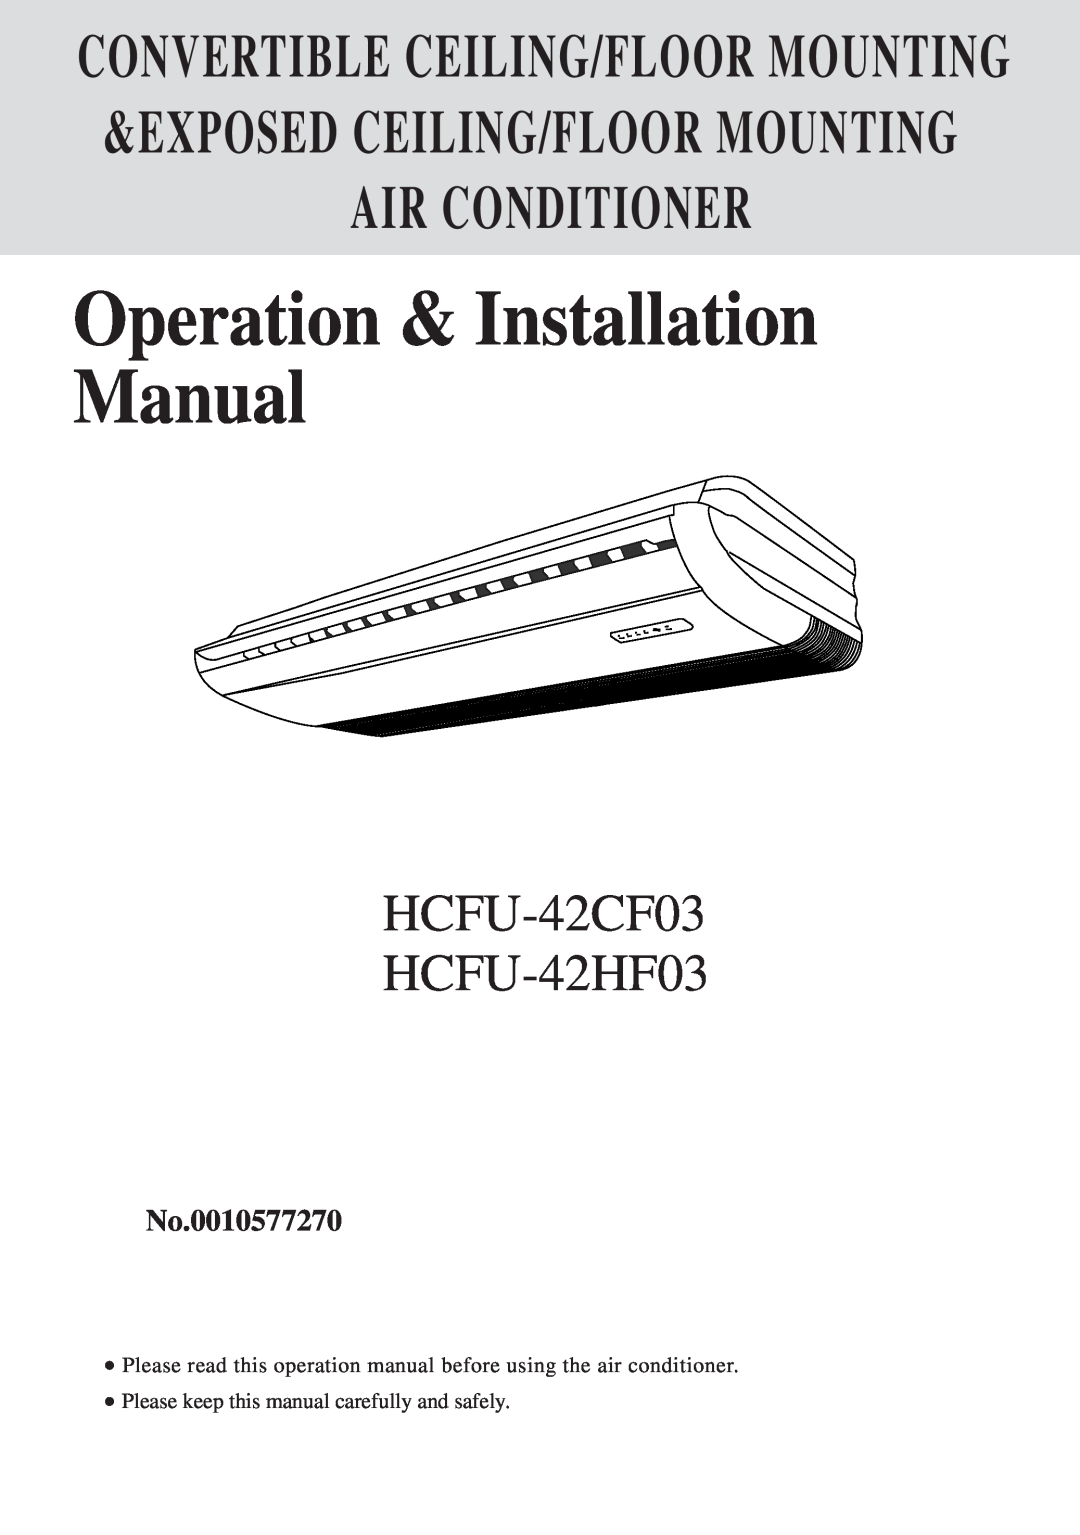 Haier installation manual Operation & Installation Manual, HCFU-42CF03 HCFU-42HF03, No.0010577270 